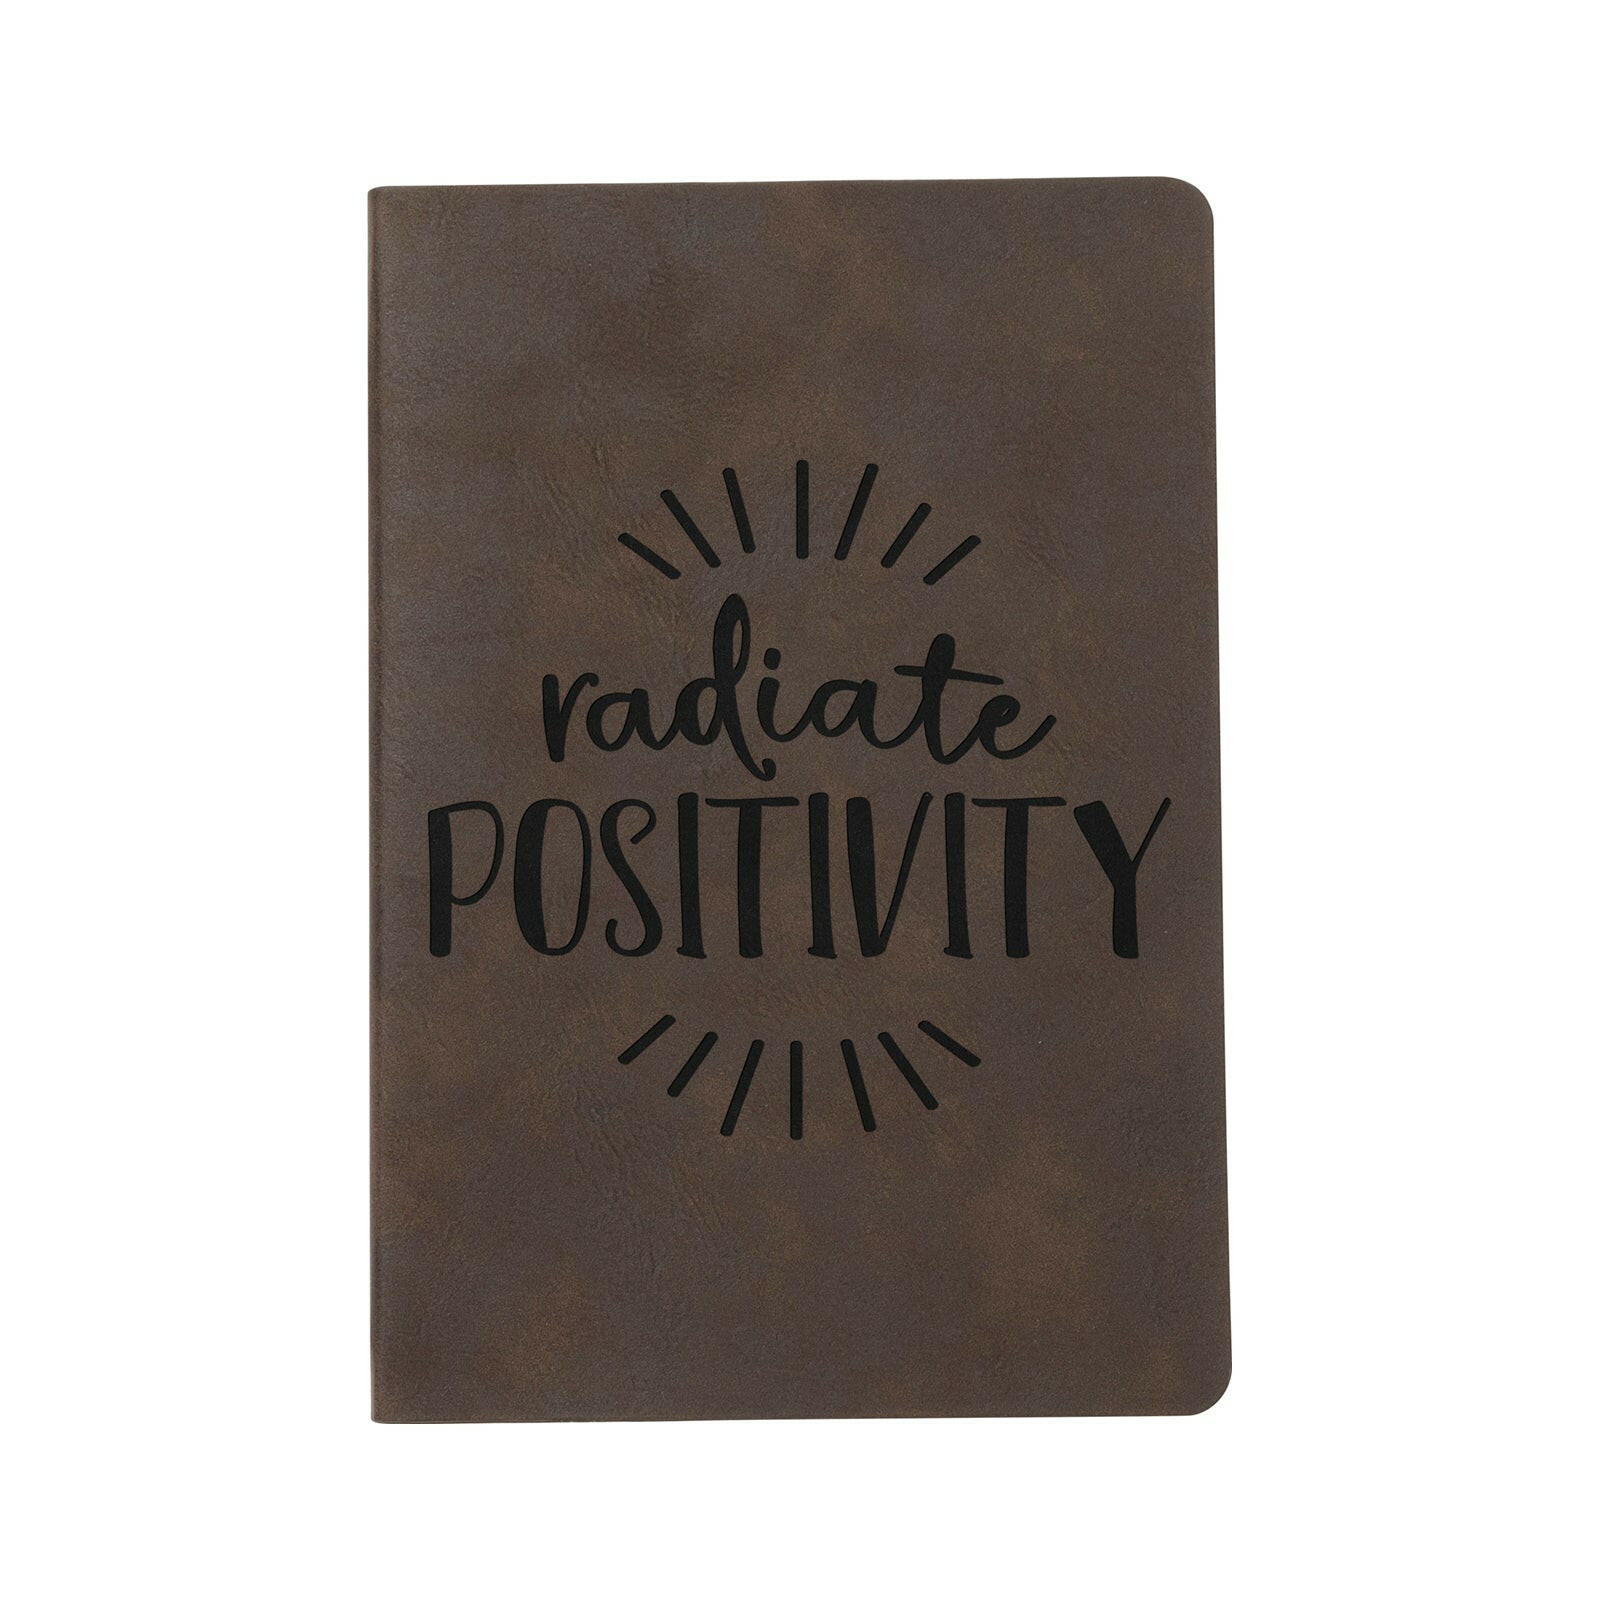 Brown Engraving Vegan Leather Notebooks - 2 Pack.